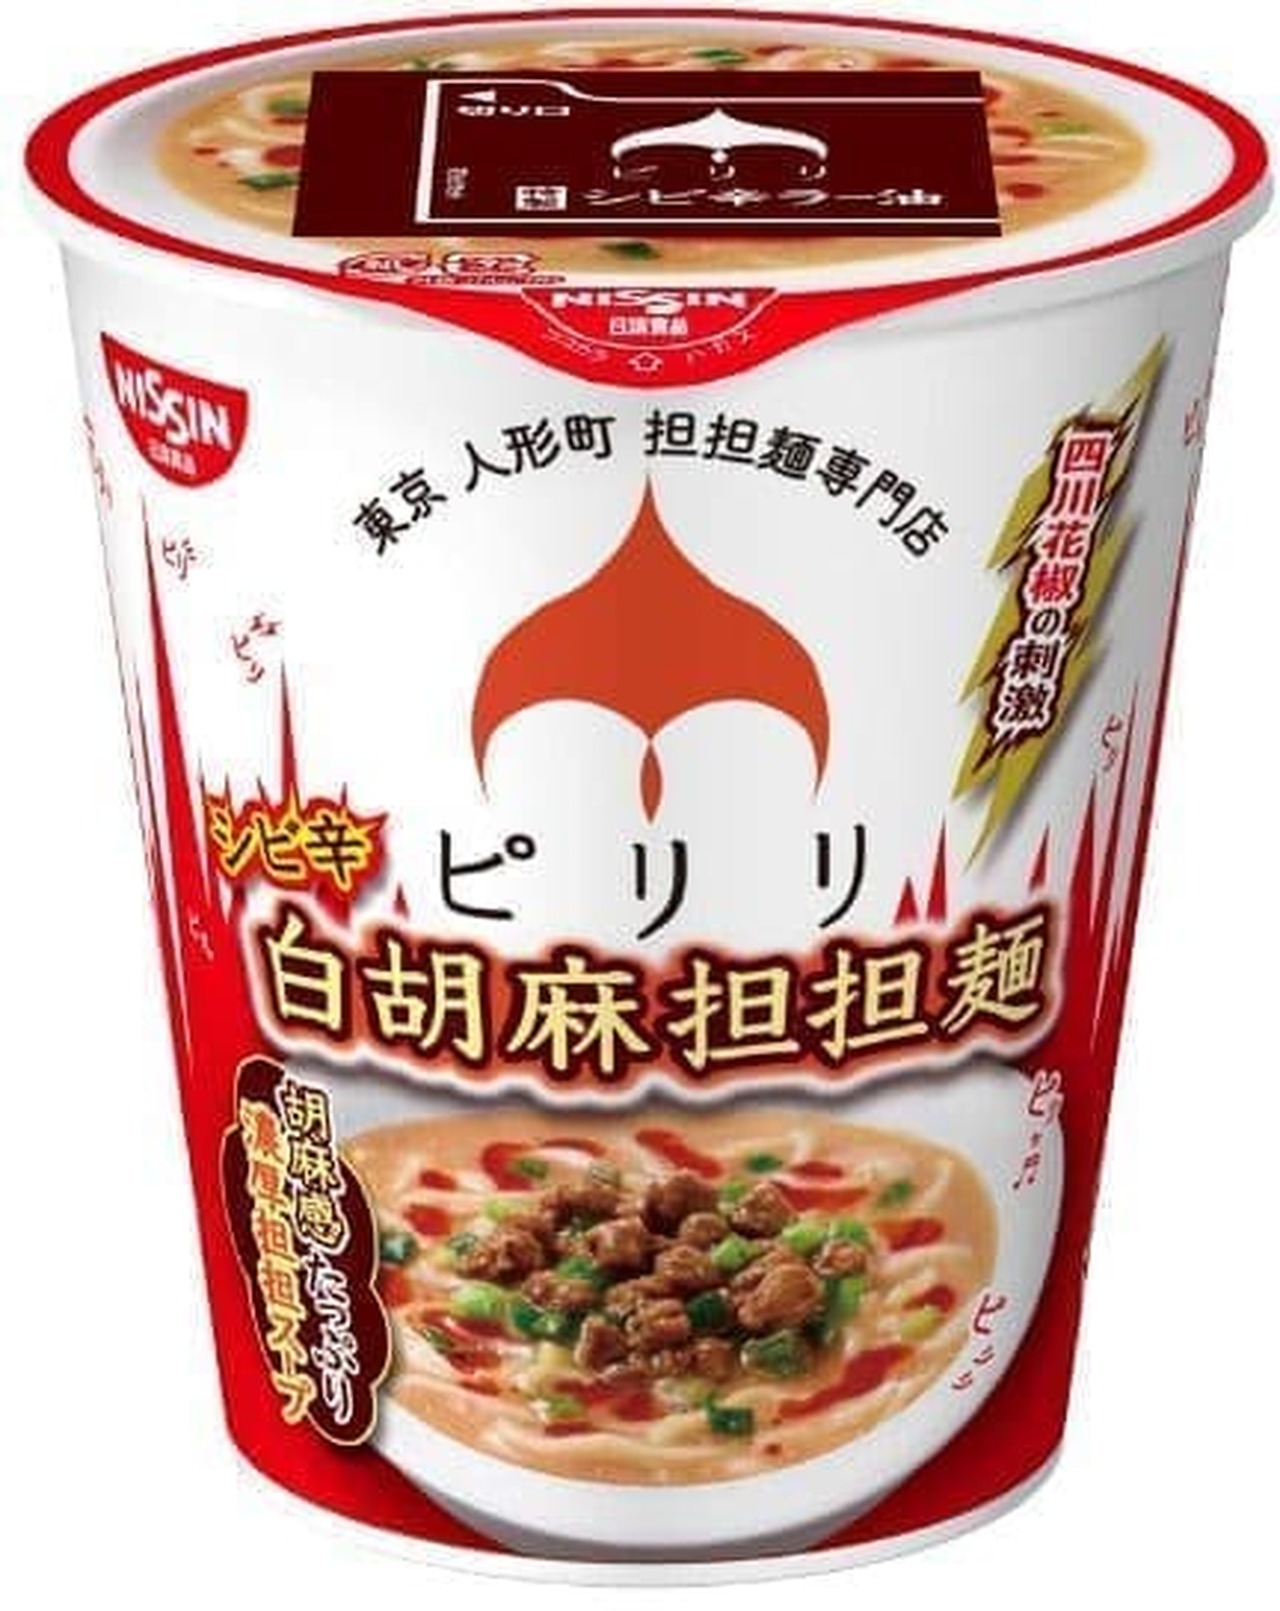 Nissin Foods "Tandan Noodles Piriri Shibi Spicy White Sesame Tantan Noodles"